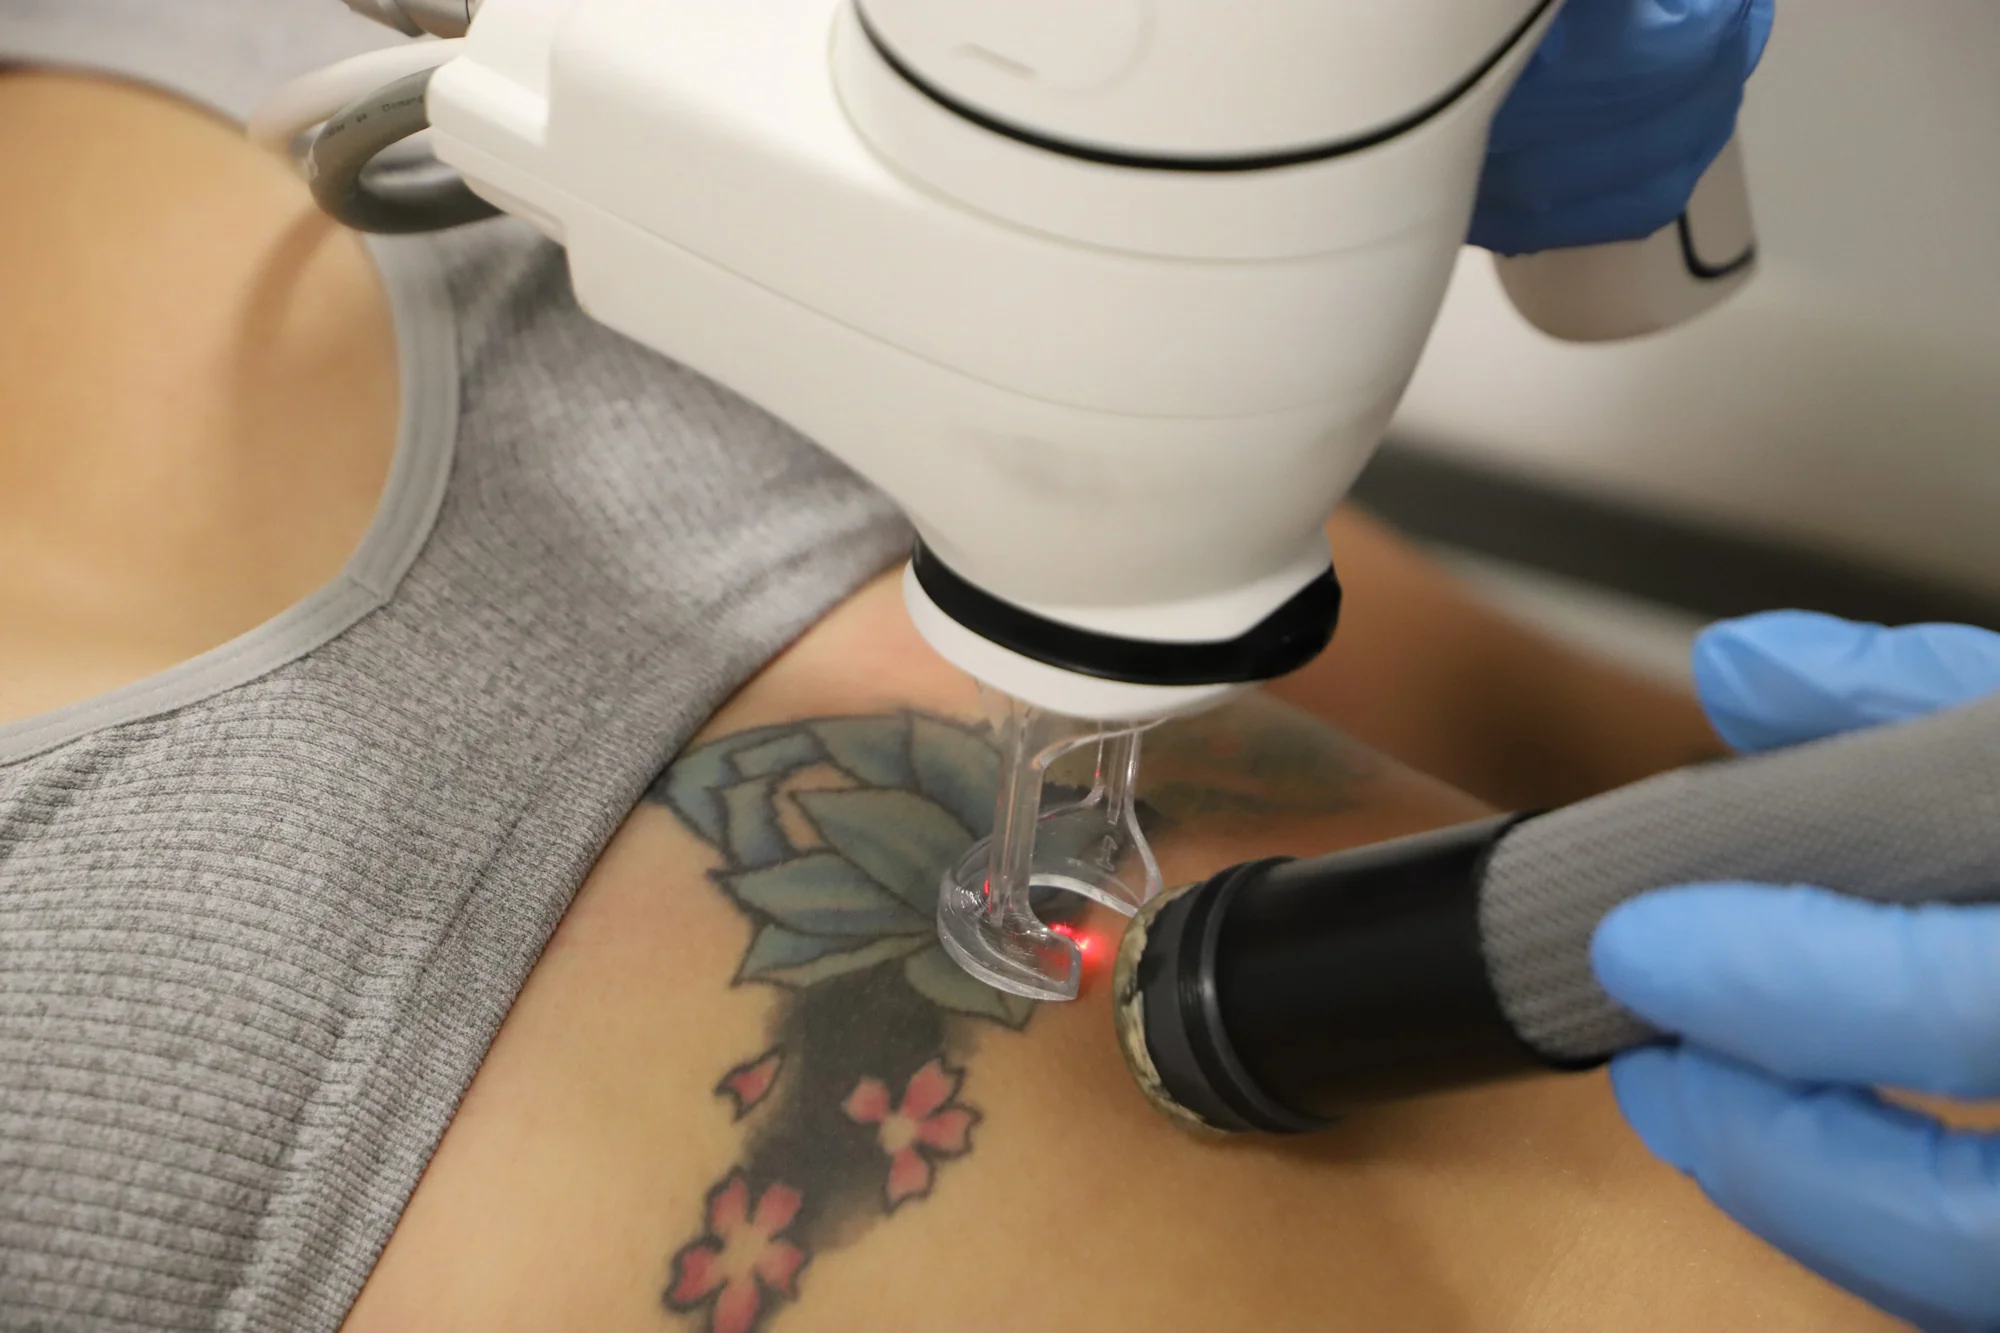 tattoo removal laser pen lightBLUE  Amazonin Beauty